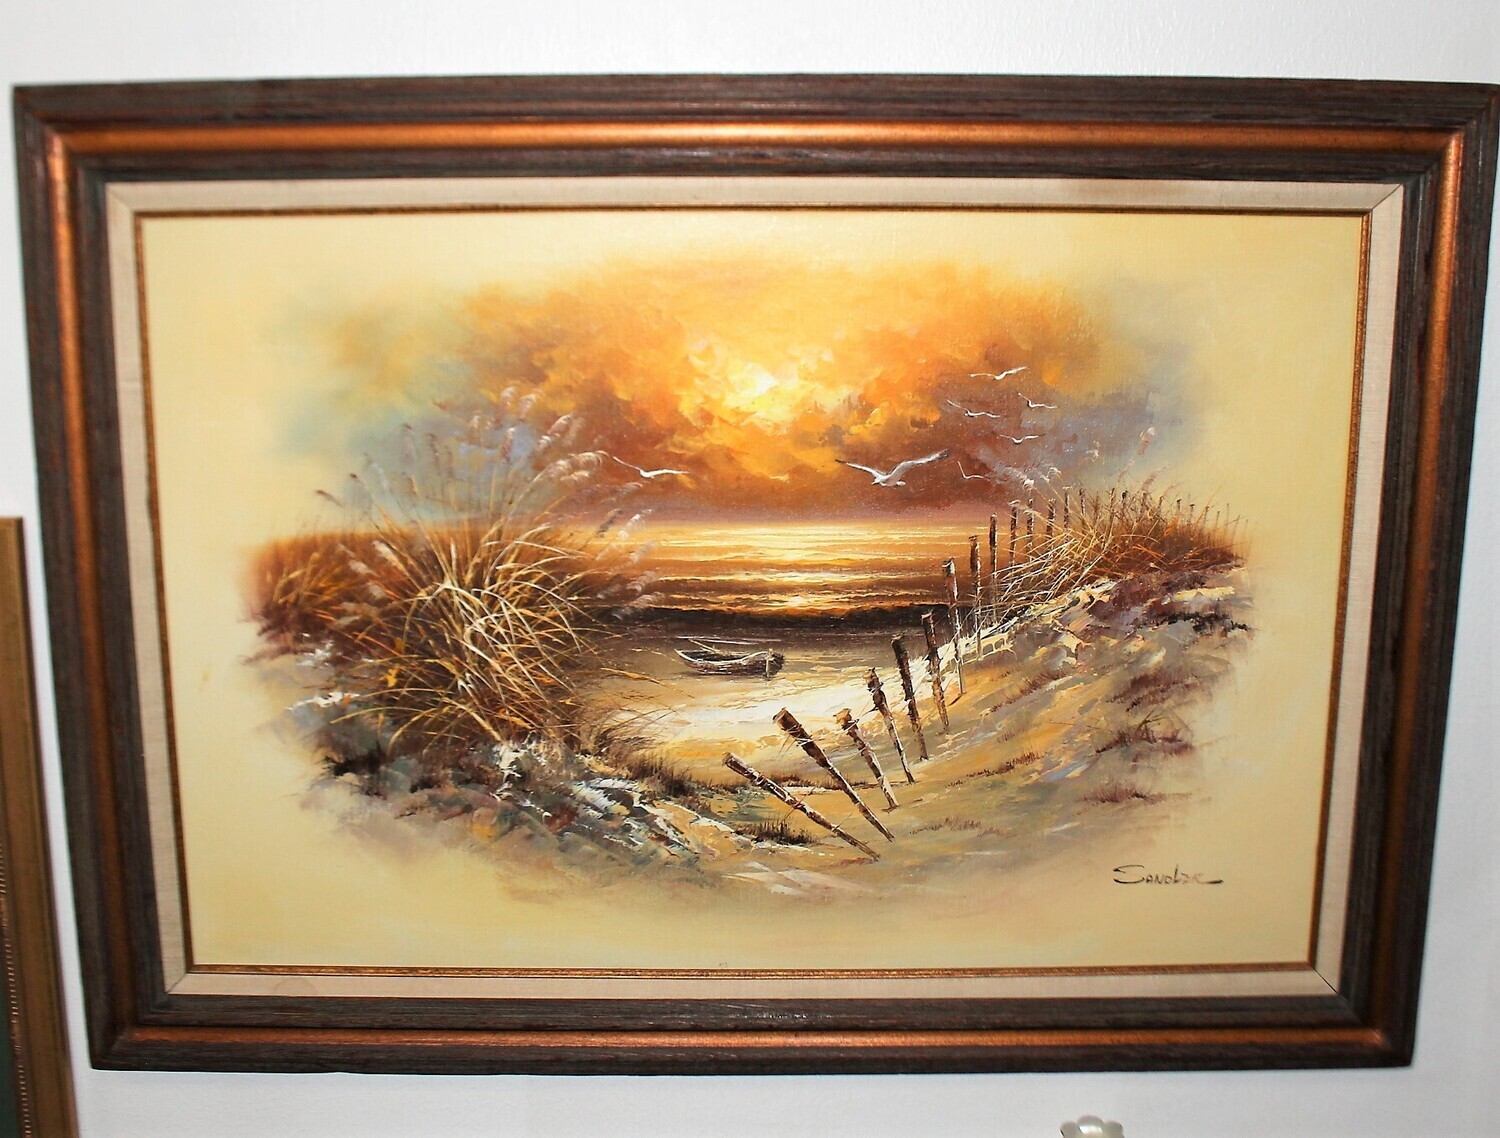 SANDLER Seascape Shore 44" x 32" Framed Original Oil on Canvas Painting, Signed